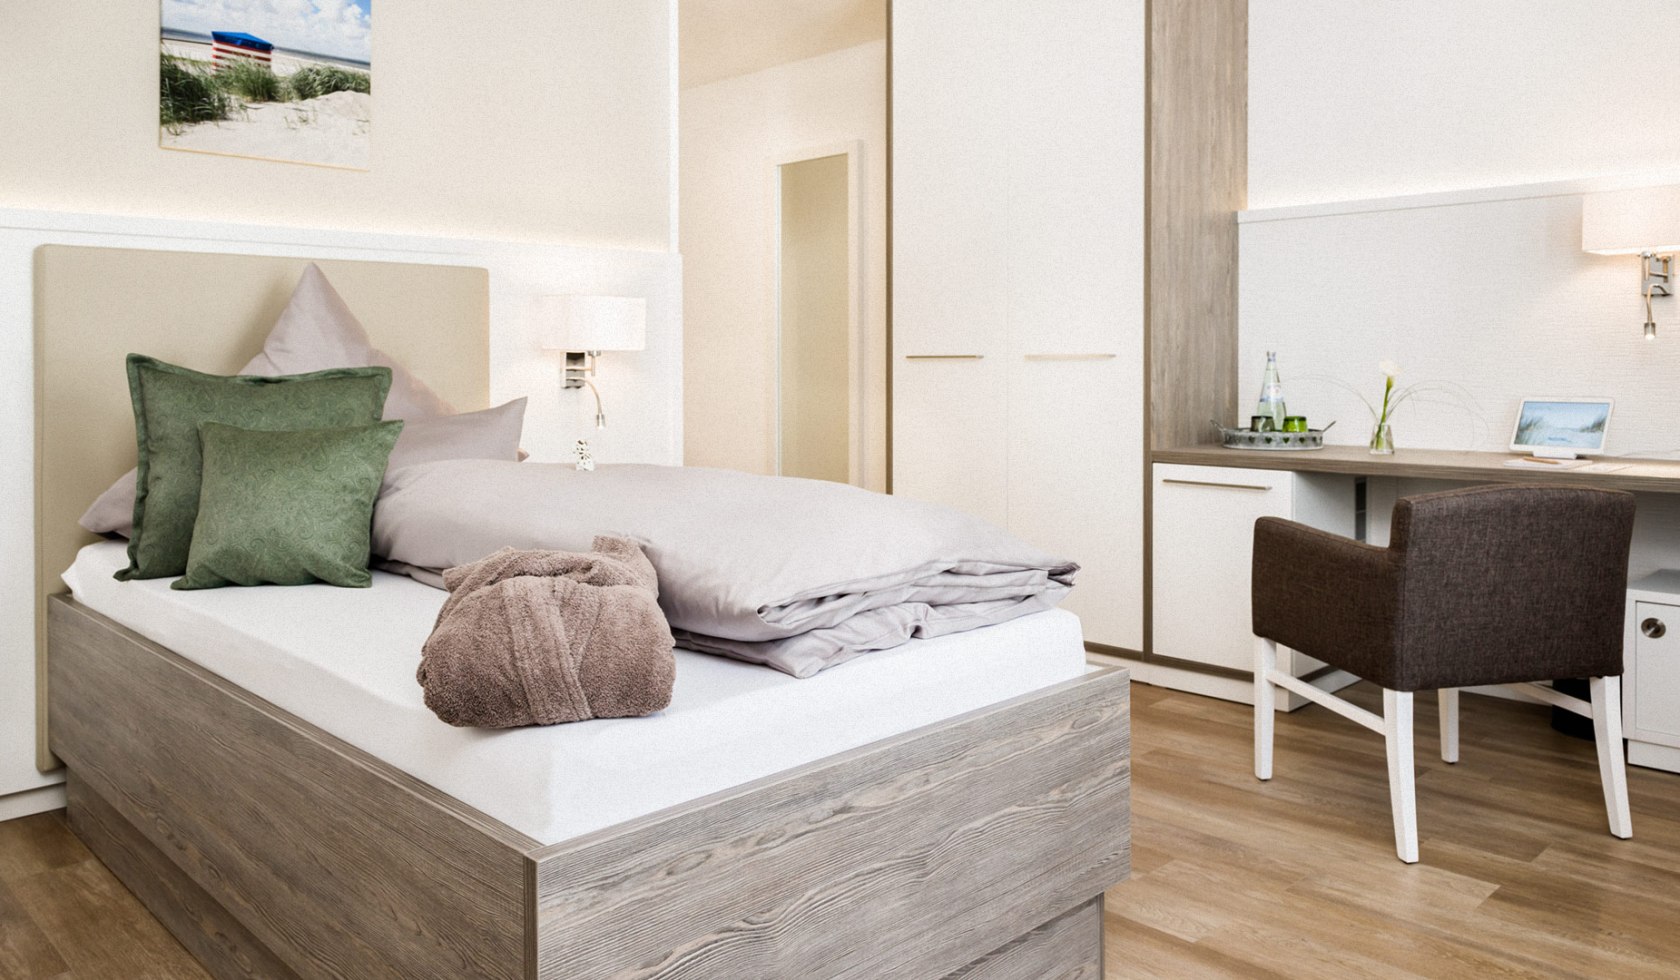 Bett im Einzelzimmer im Hotel Inselhof Borkum, © Inselhof Borkum